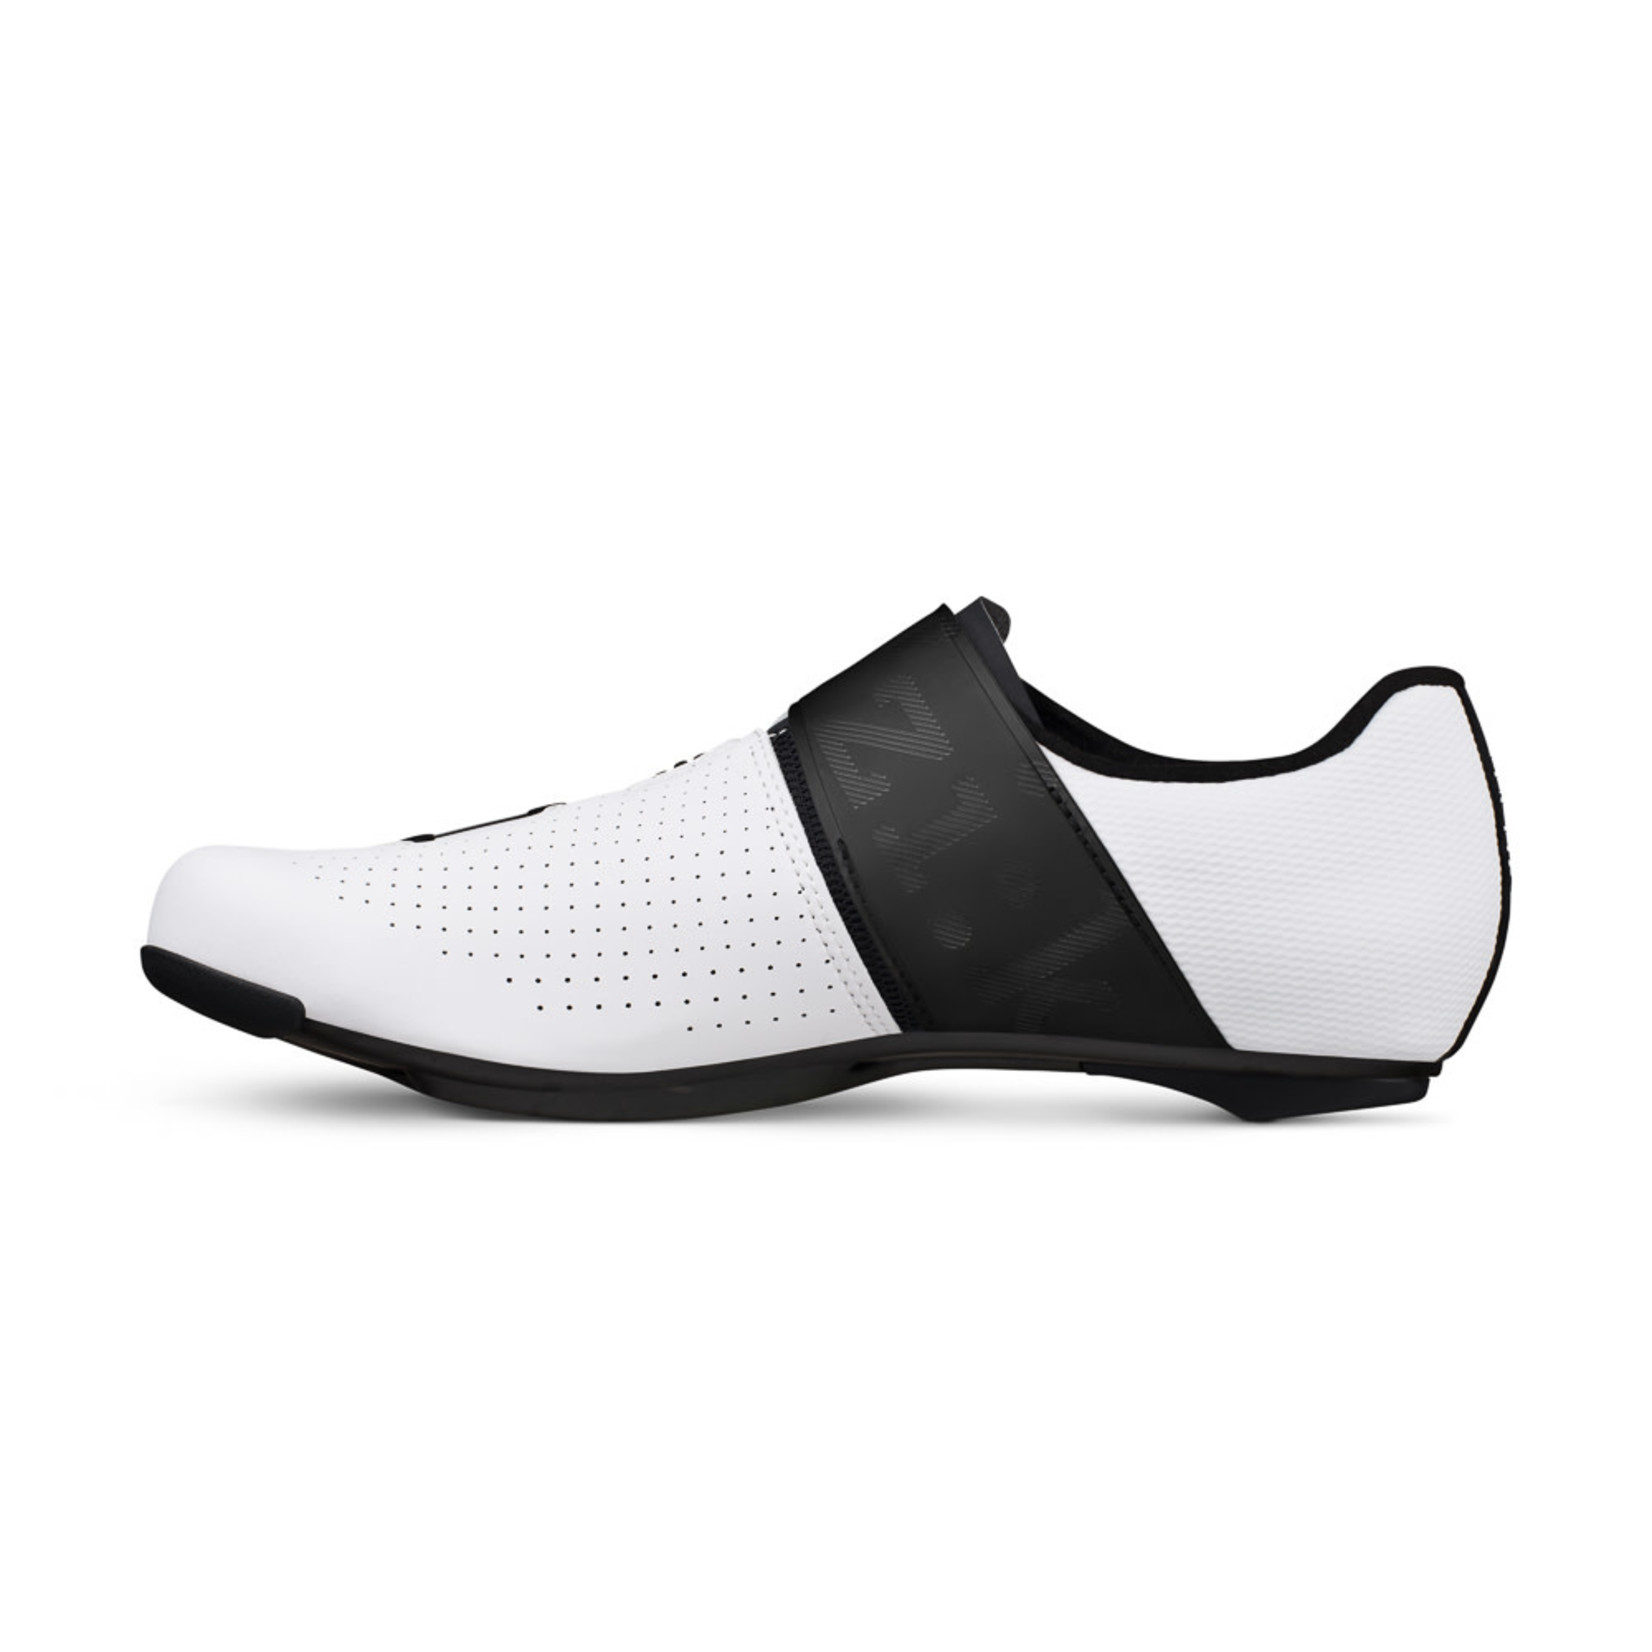 Fizik Fizik Vento Infinito Full Carbon Bike/Cycling Shoes - White/Black